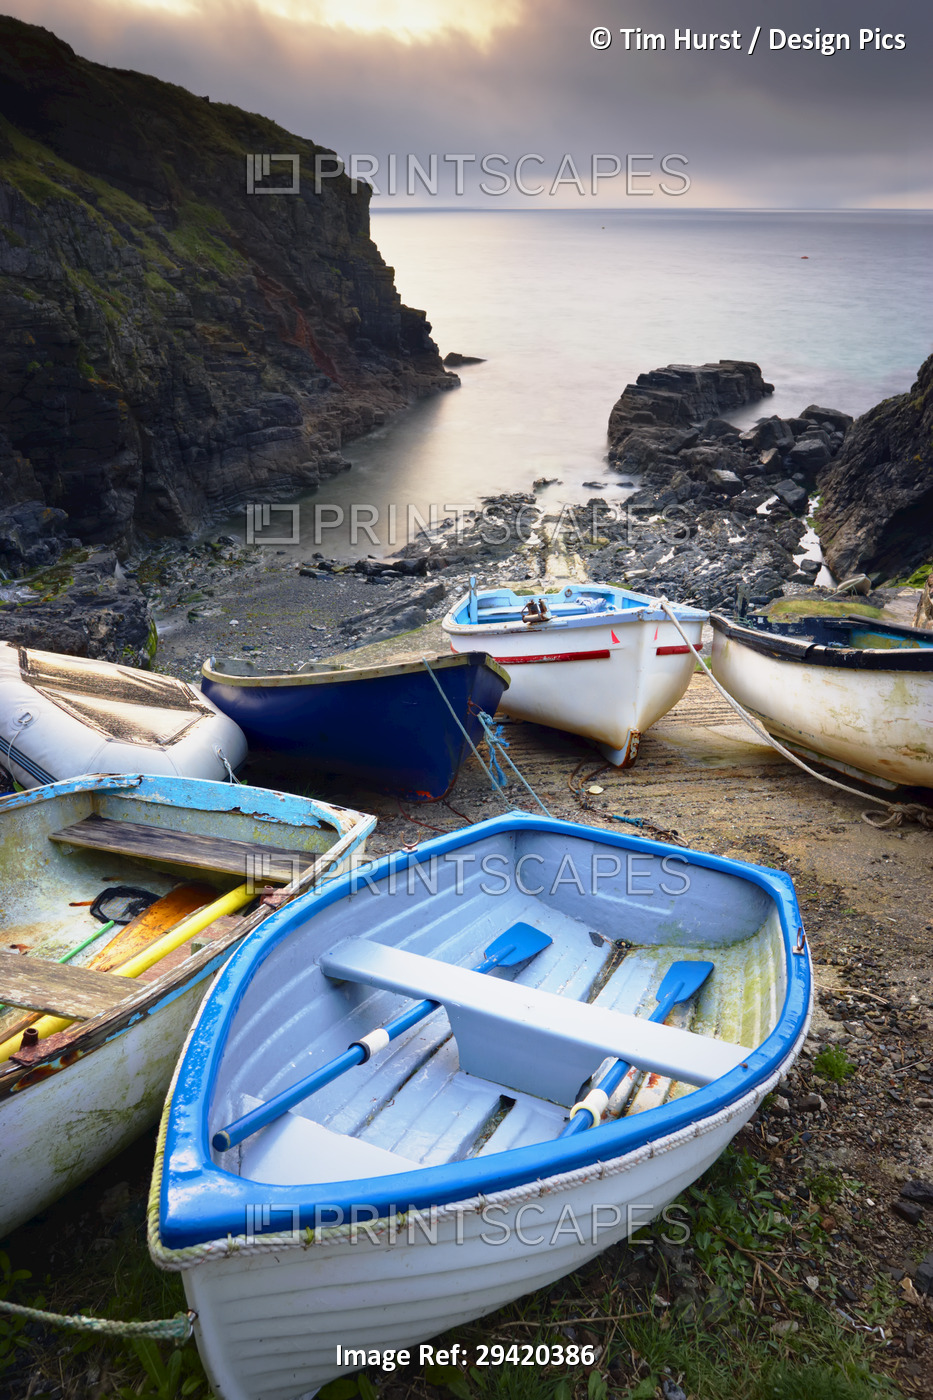 Small Boats on Beach, Church Cove, Lizard Peninsula, Cornwall, England